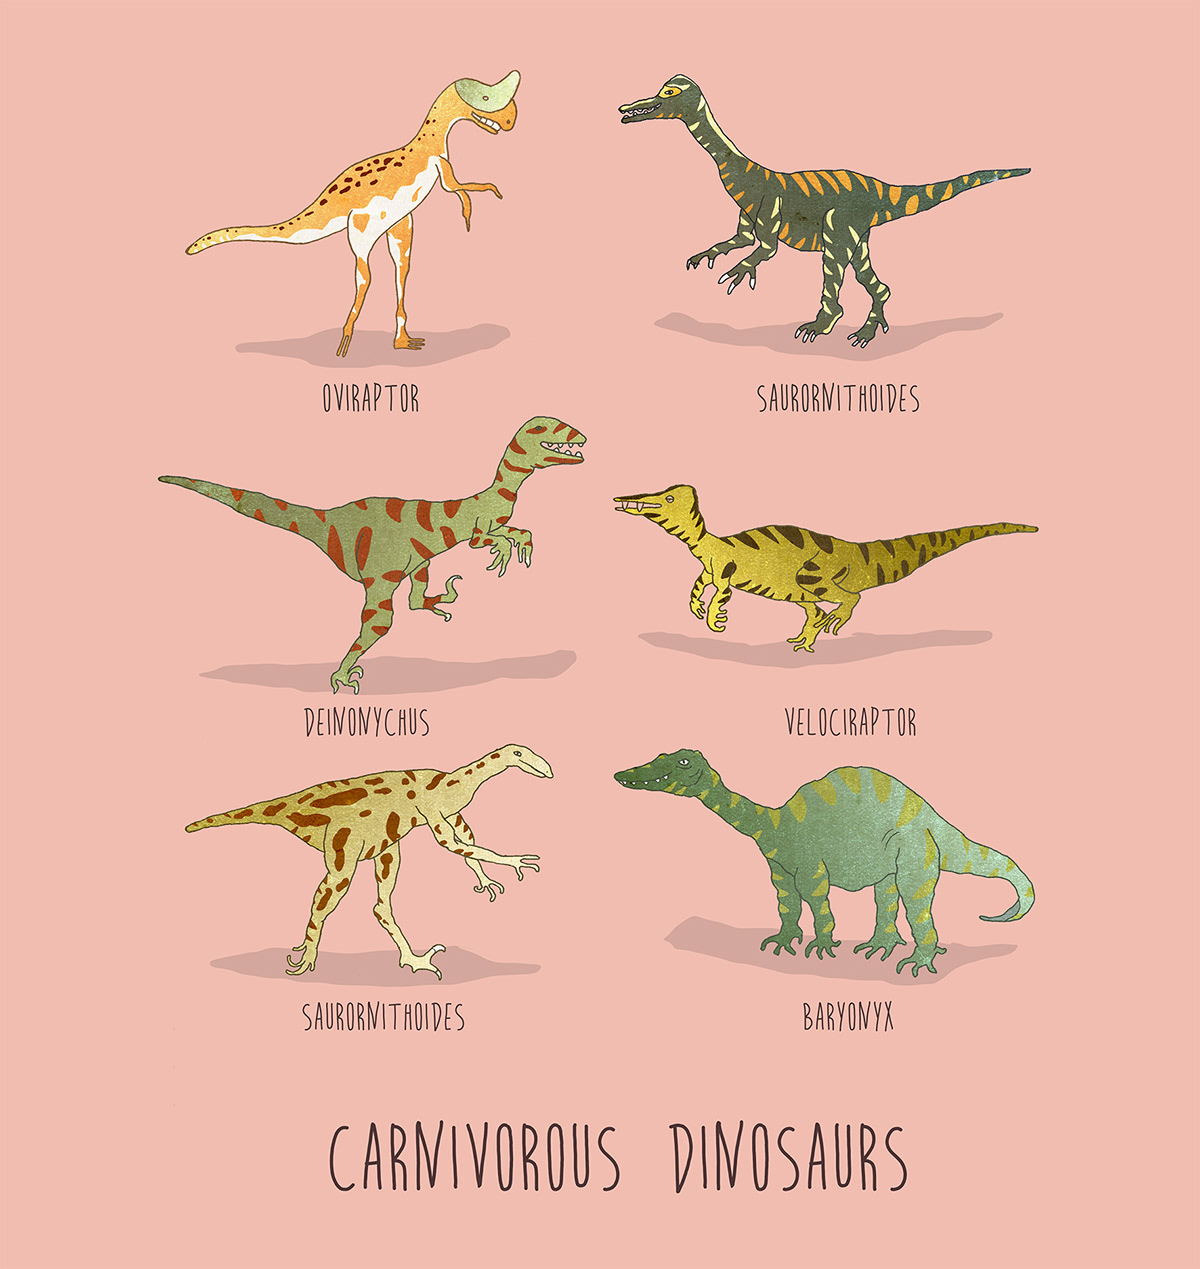 dinosaurs world Ancient draw cartoon dreams homage respect creatures animals